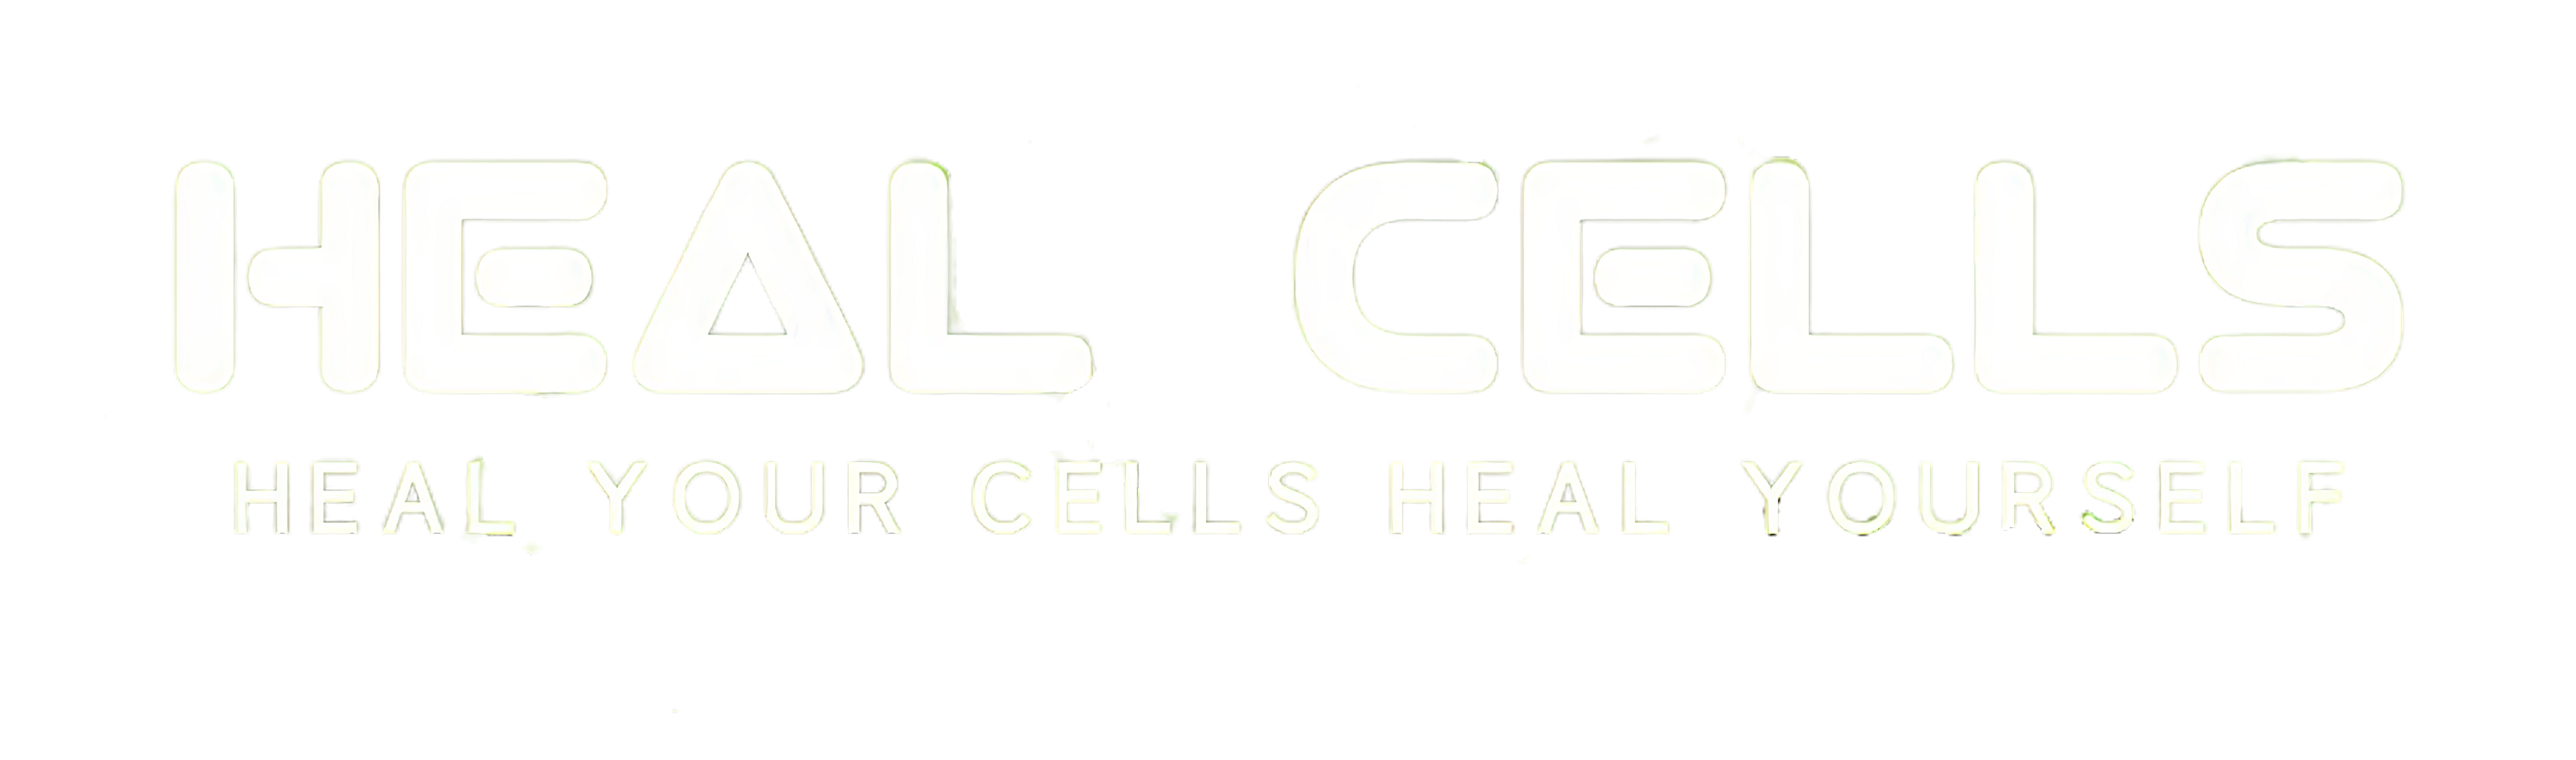 Heal Cells Logo